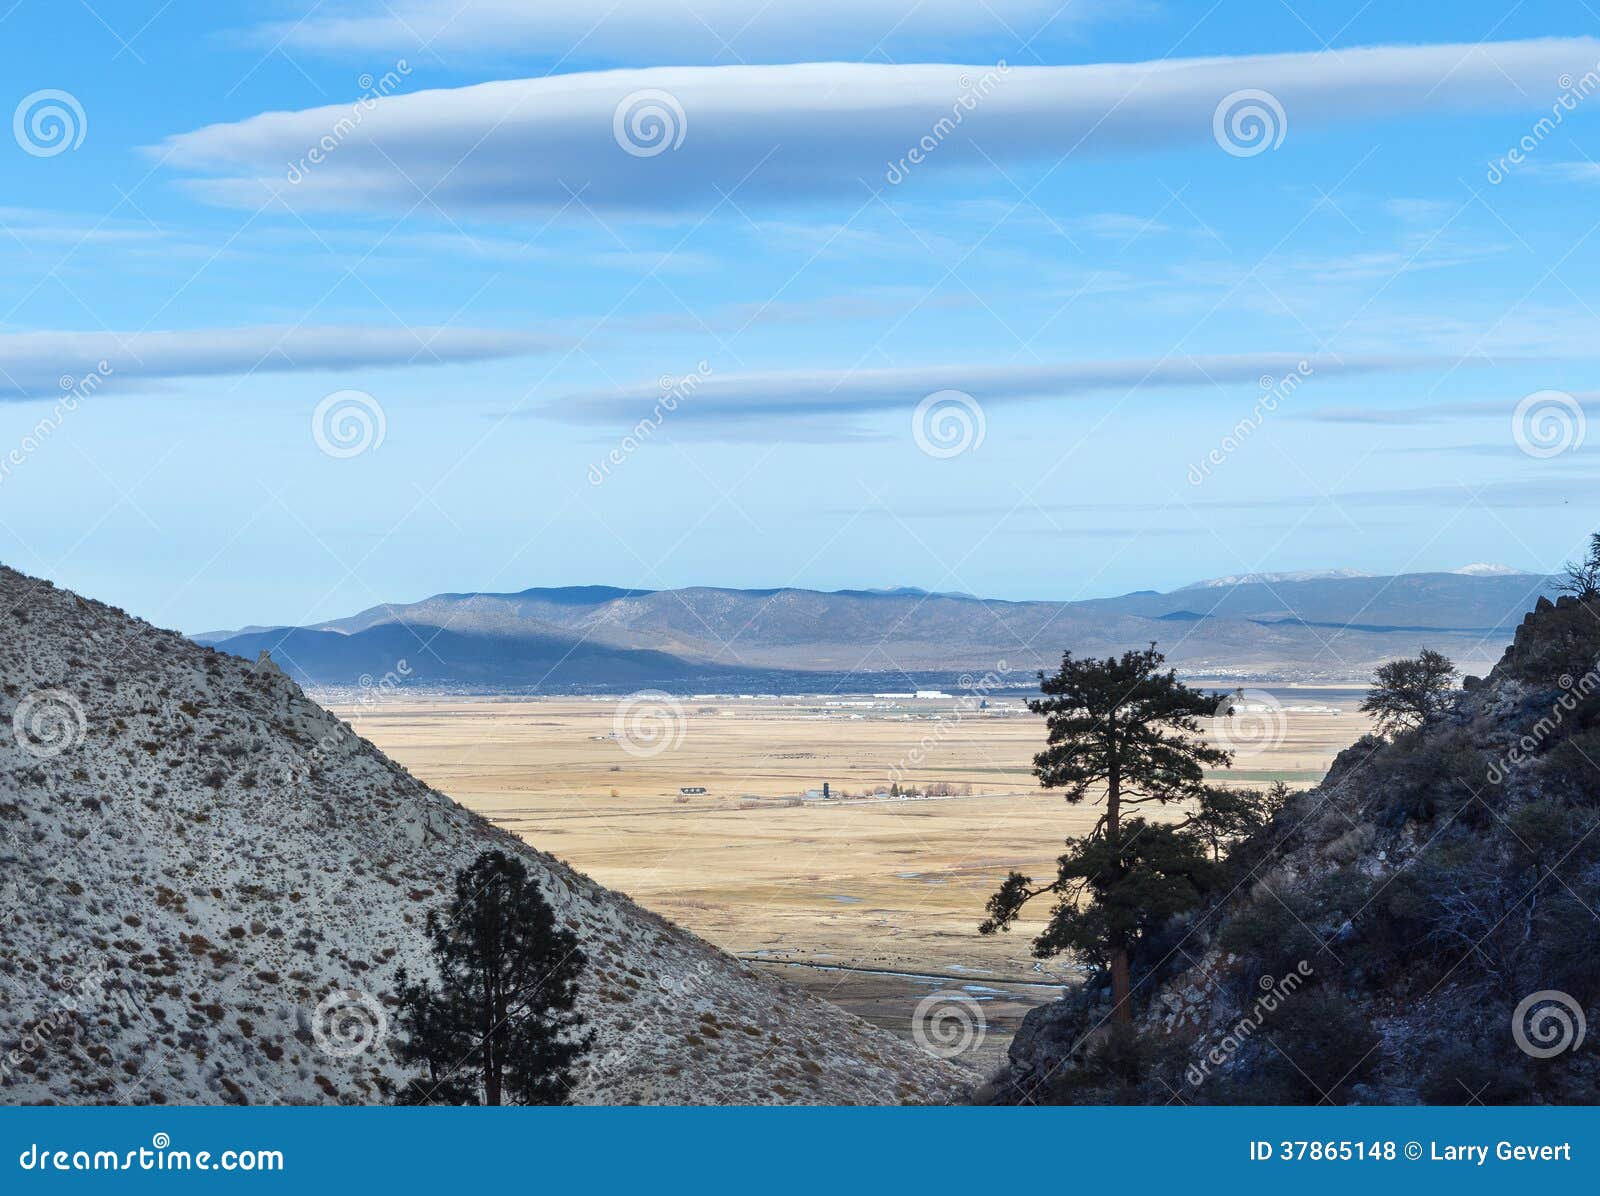 the carson river valley, nevada